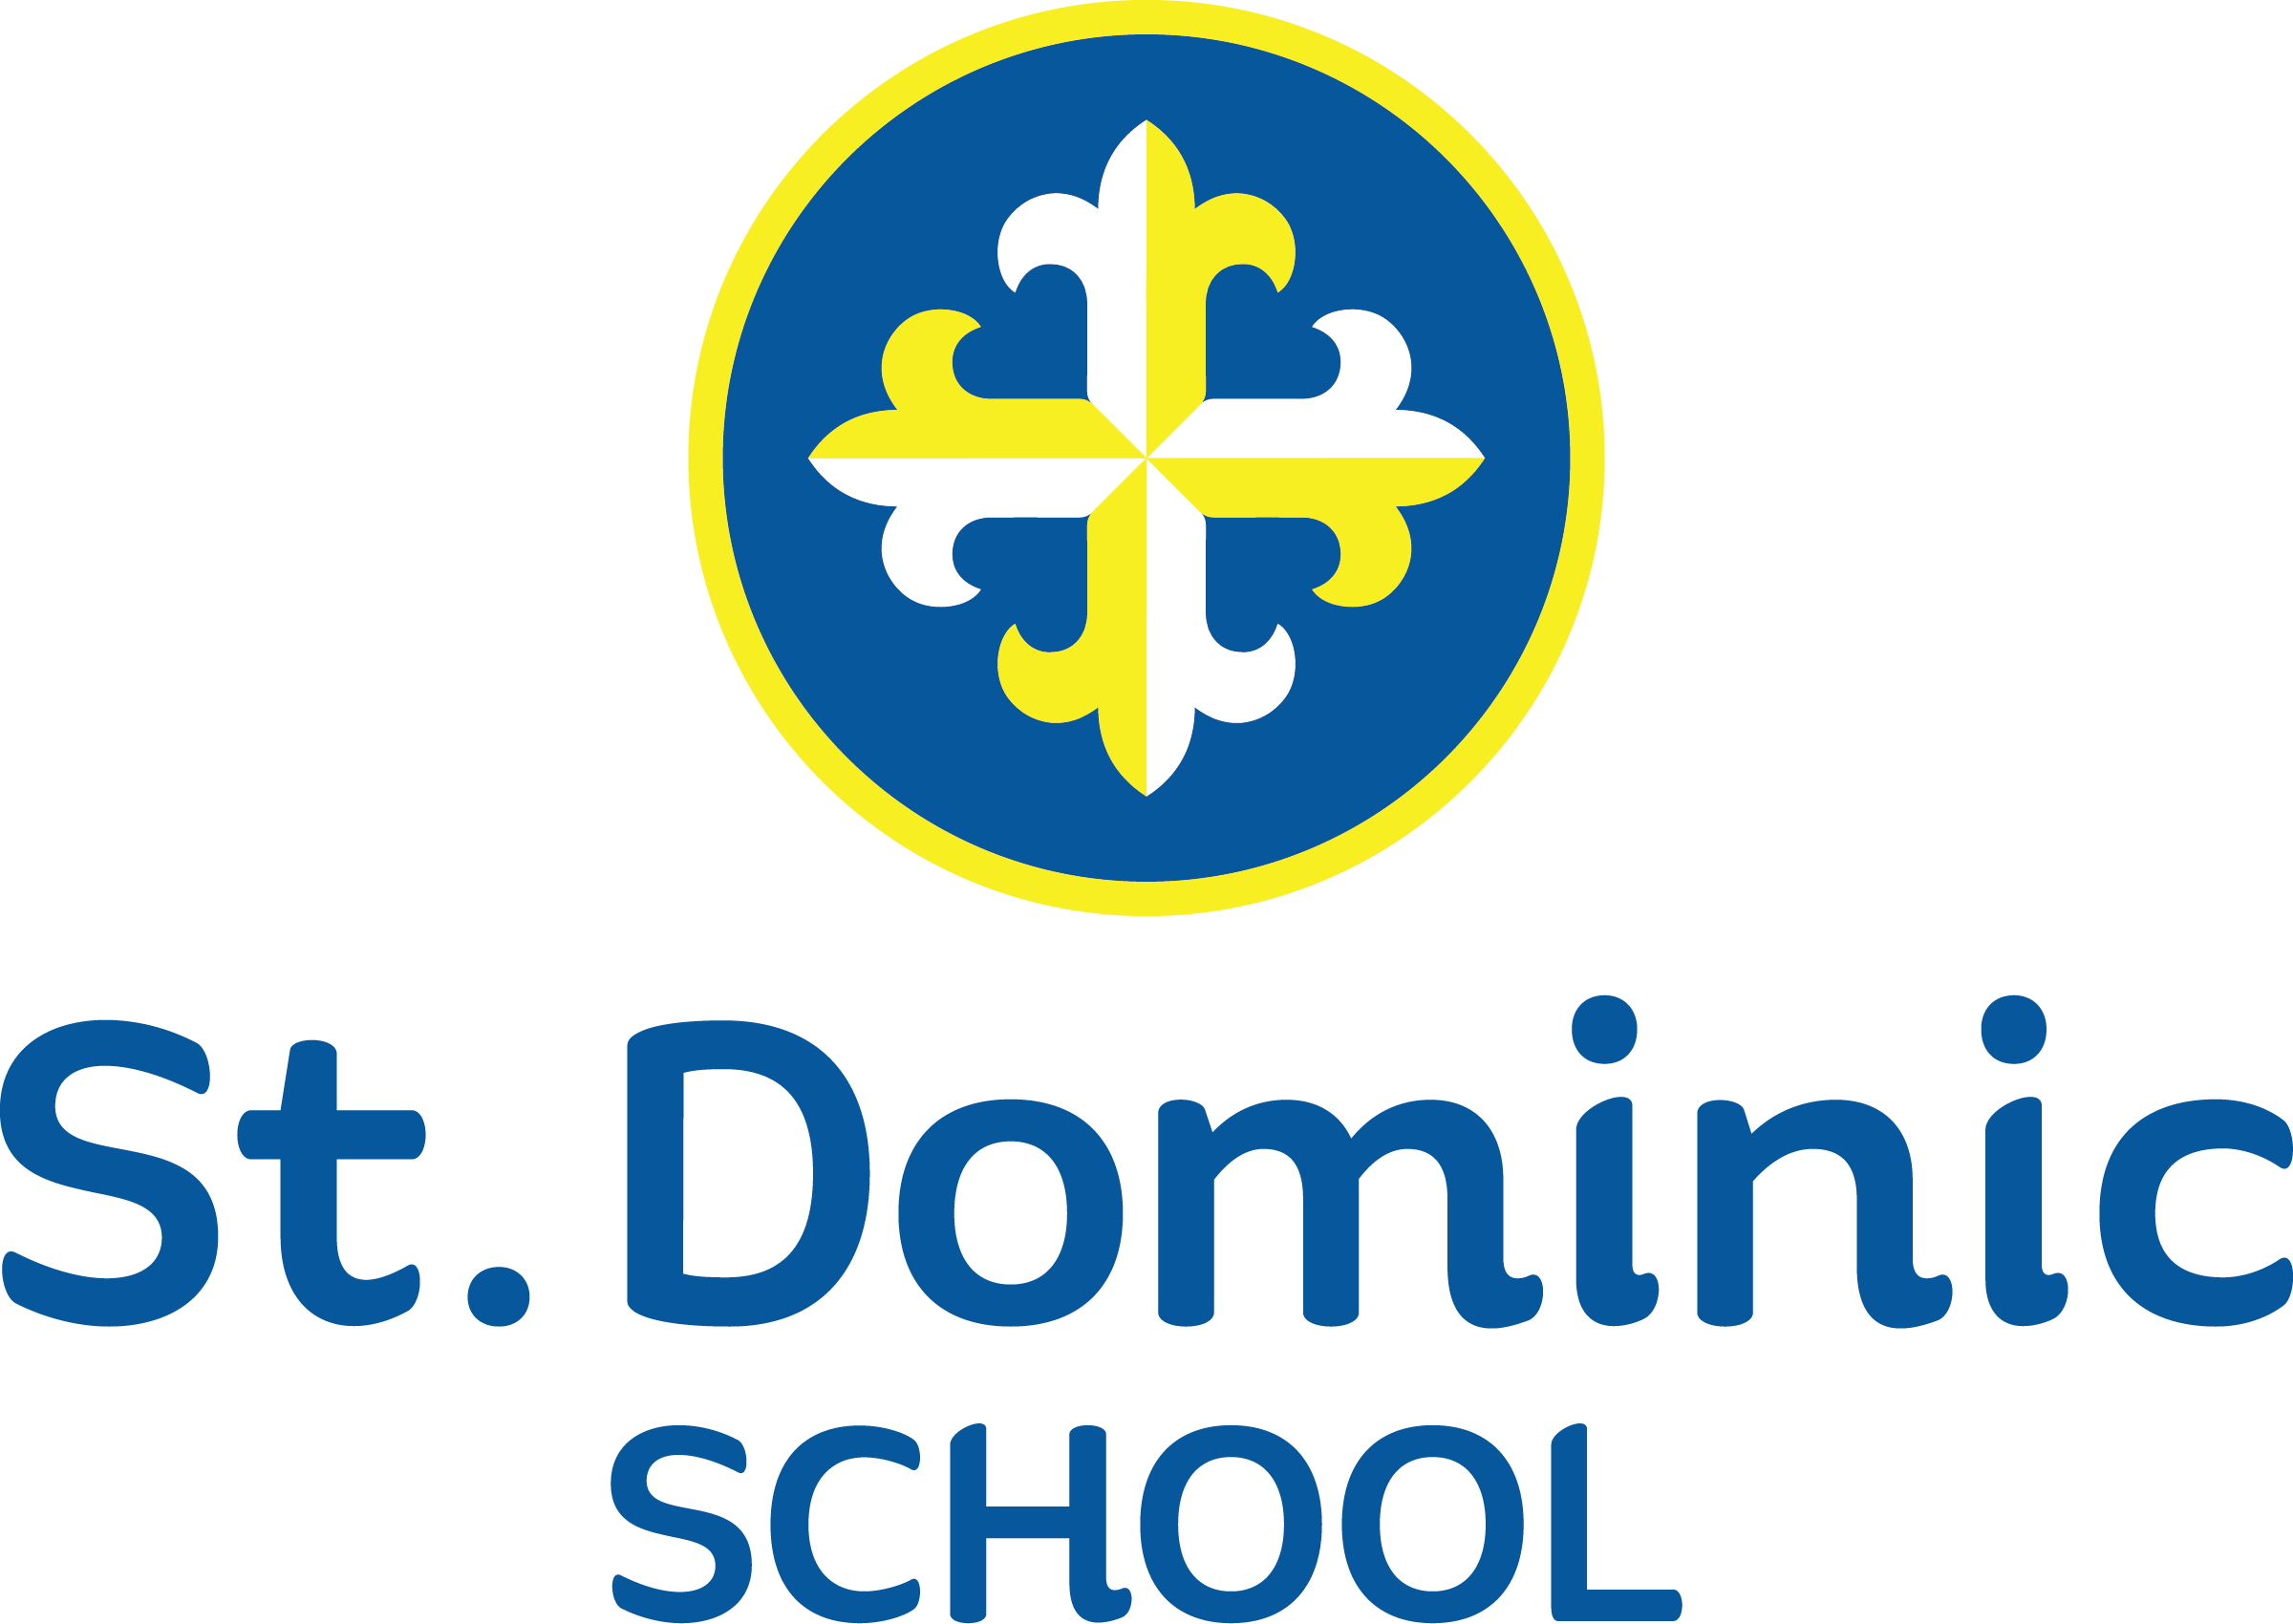 StDominicSchool_Logo_Vertical_Final